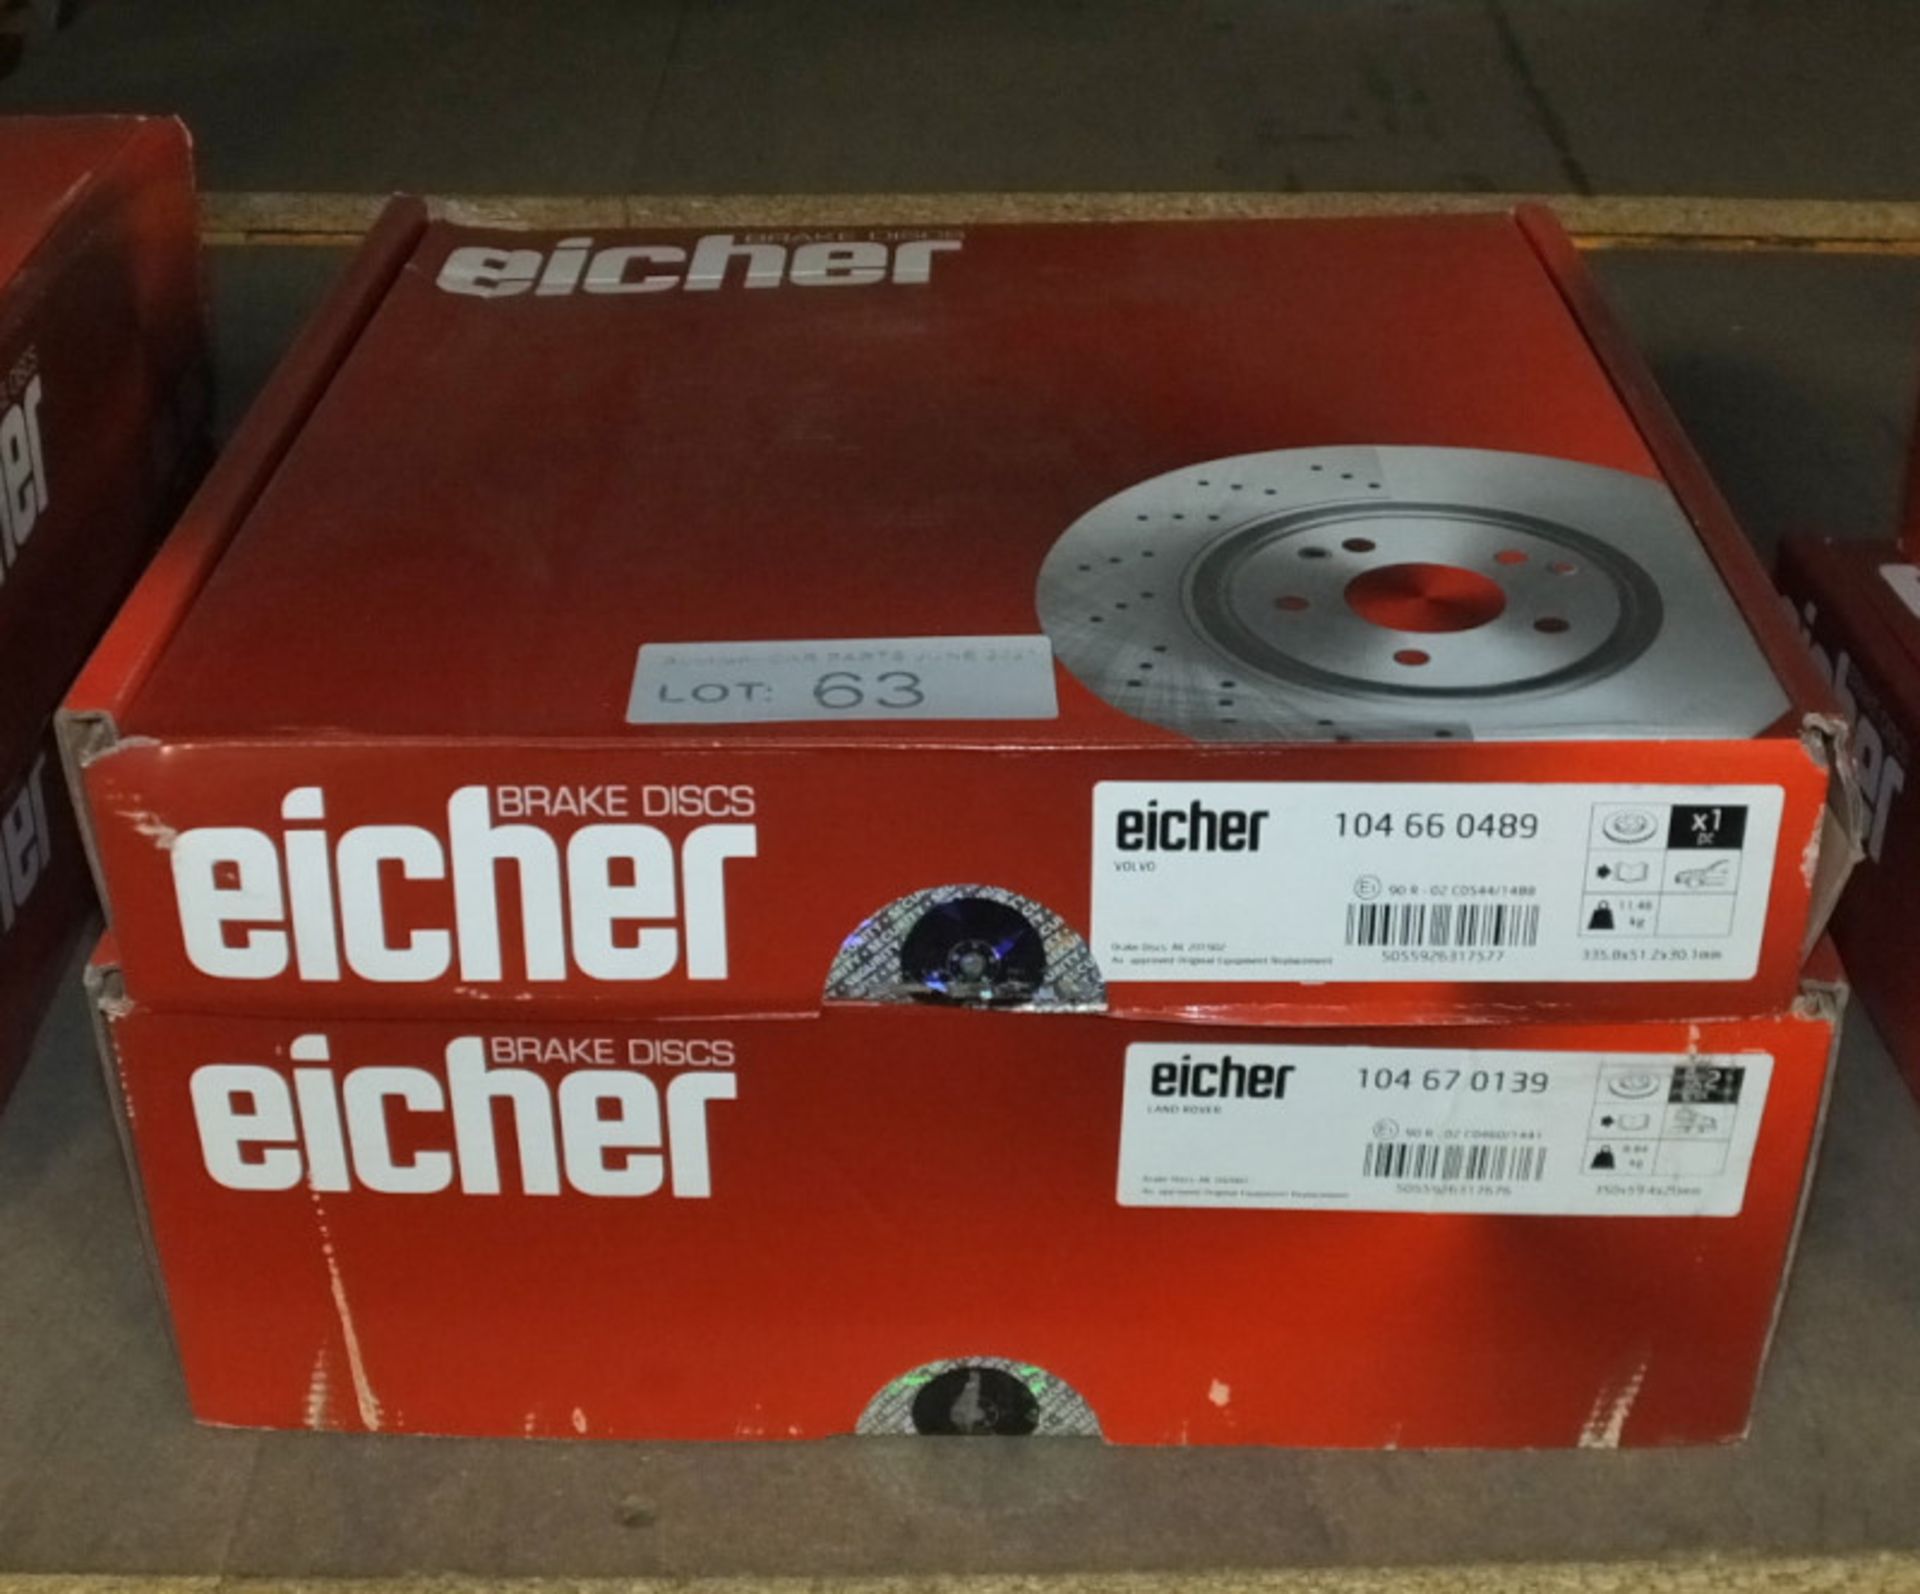 2x Eicher Brake Disc Sets - Models 104 66 0489 & 104 67 0139